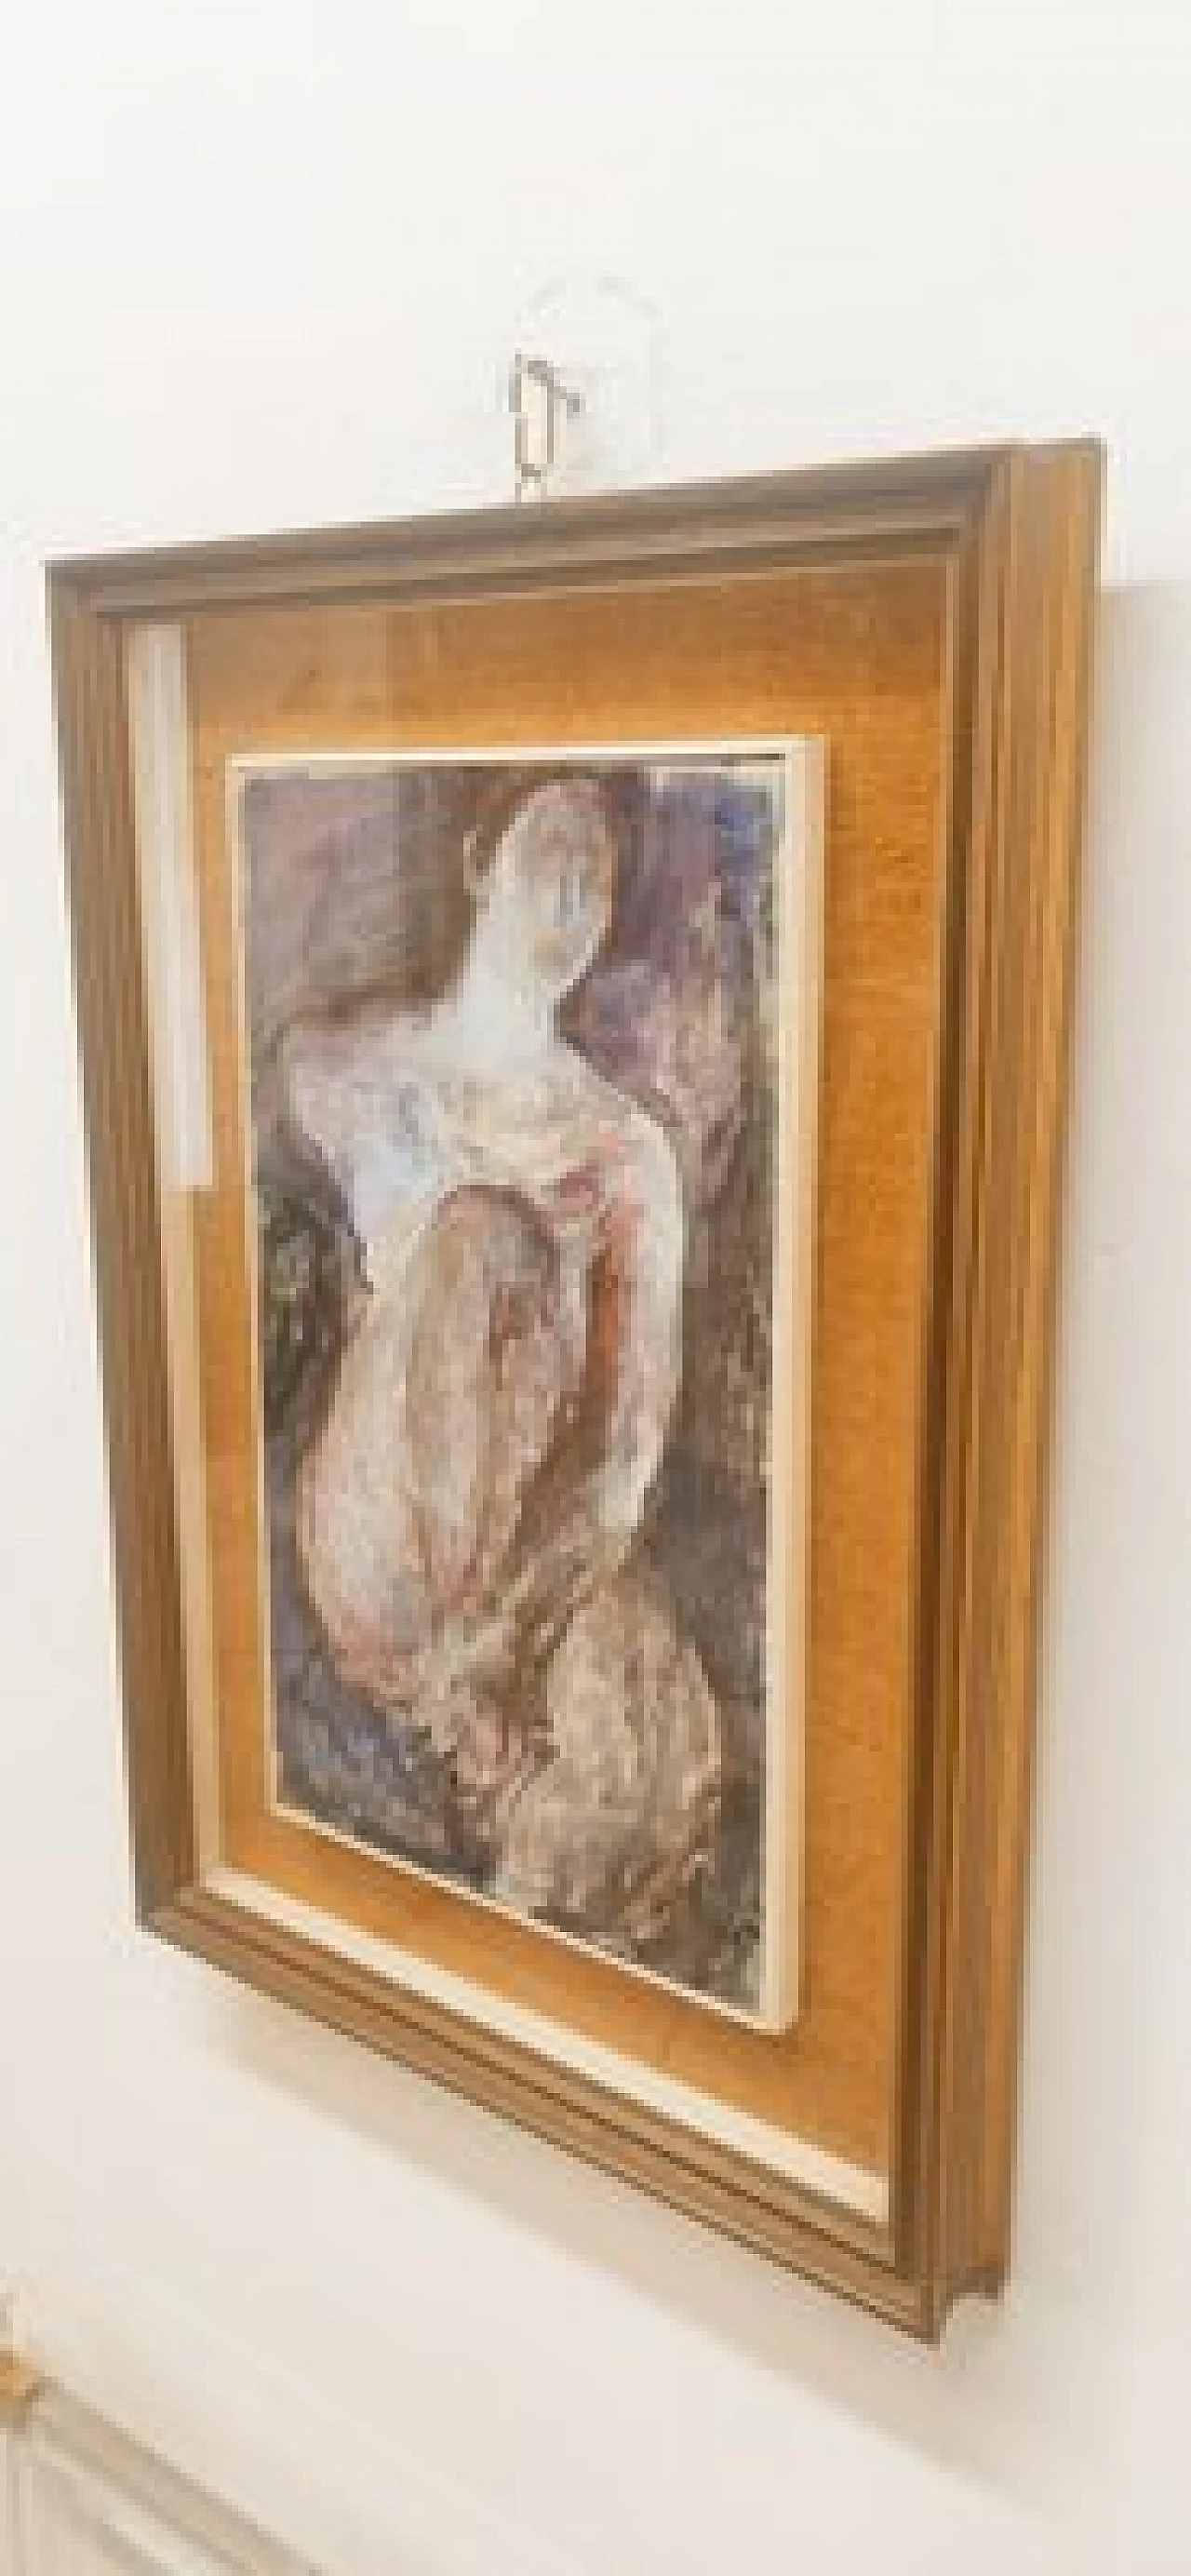 Capaldo, female nude, oil painting on canvas, 1970s 3